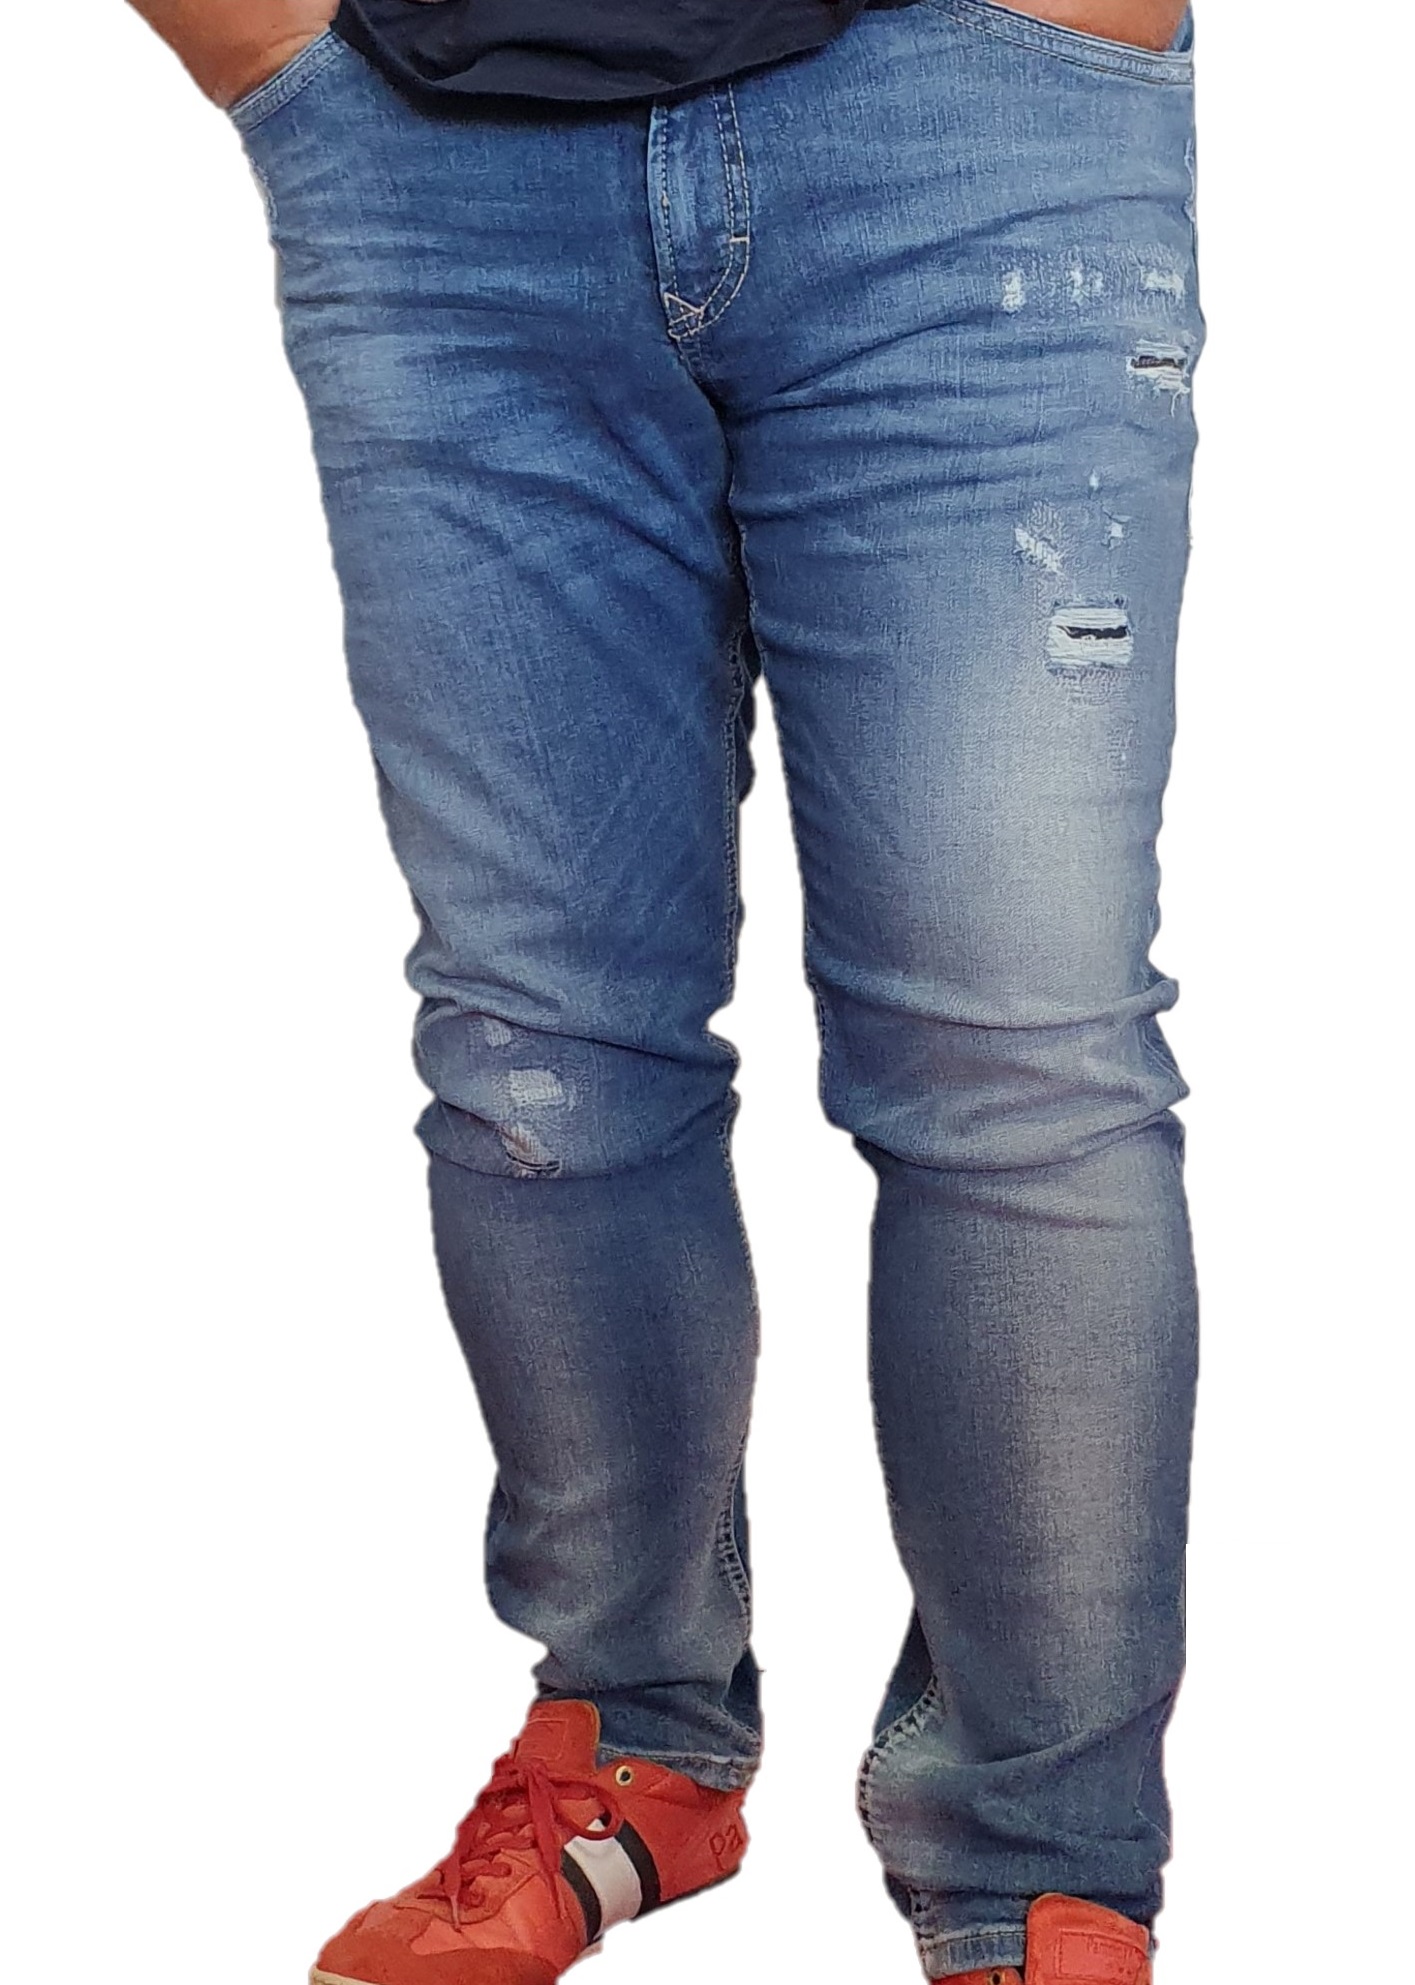 MAC Herren-Jeans, 5-Pocket | Arne Jeans kernige Jeans, GioMilano Pipe, authentische Drivers